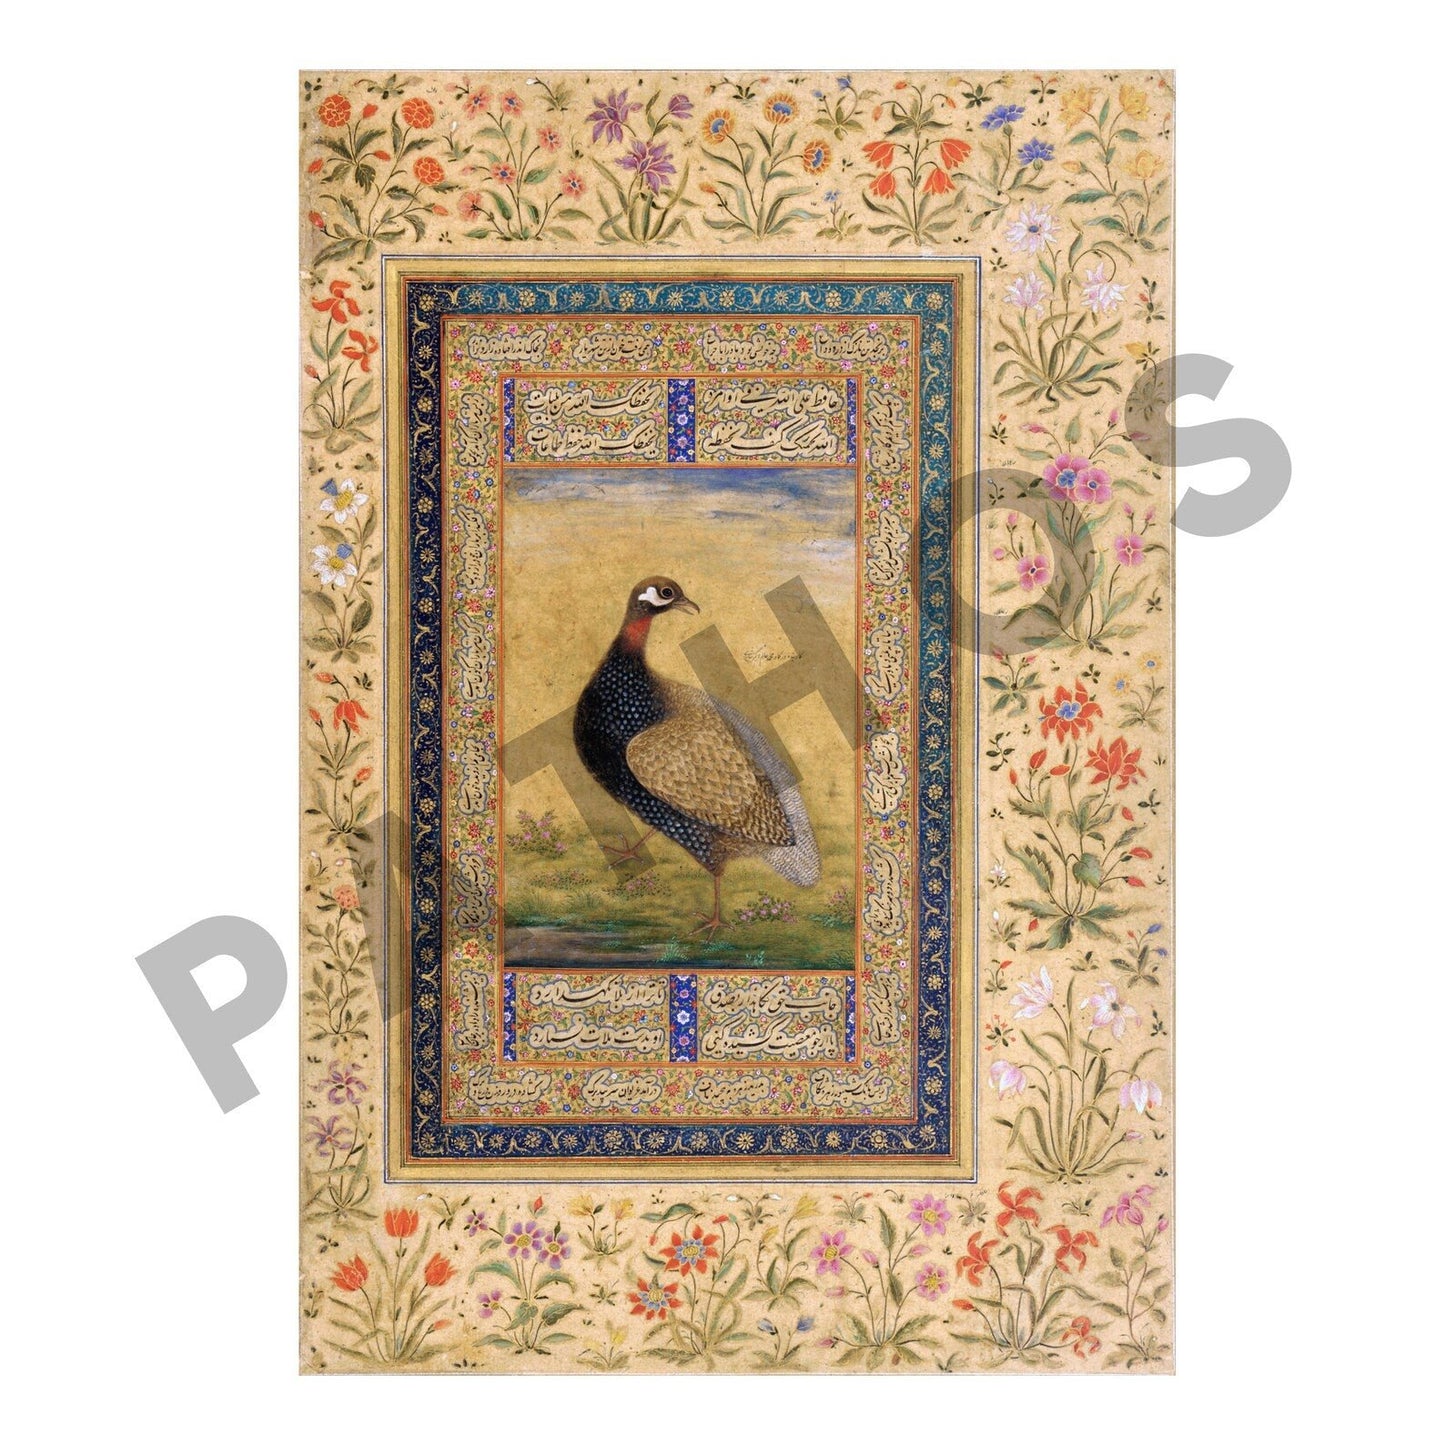 Black Francolin (Traditional Persian Miniature Art)